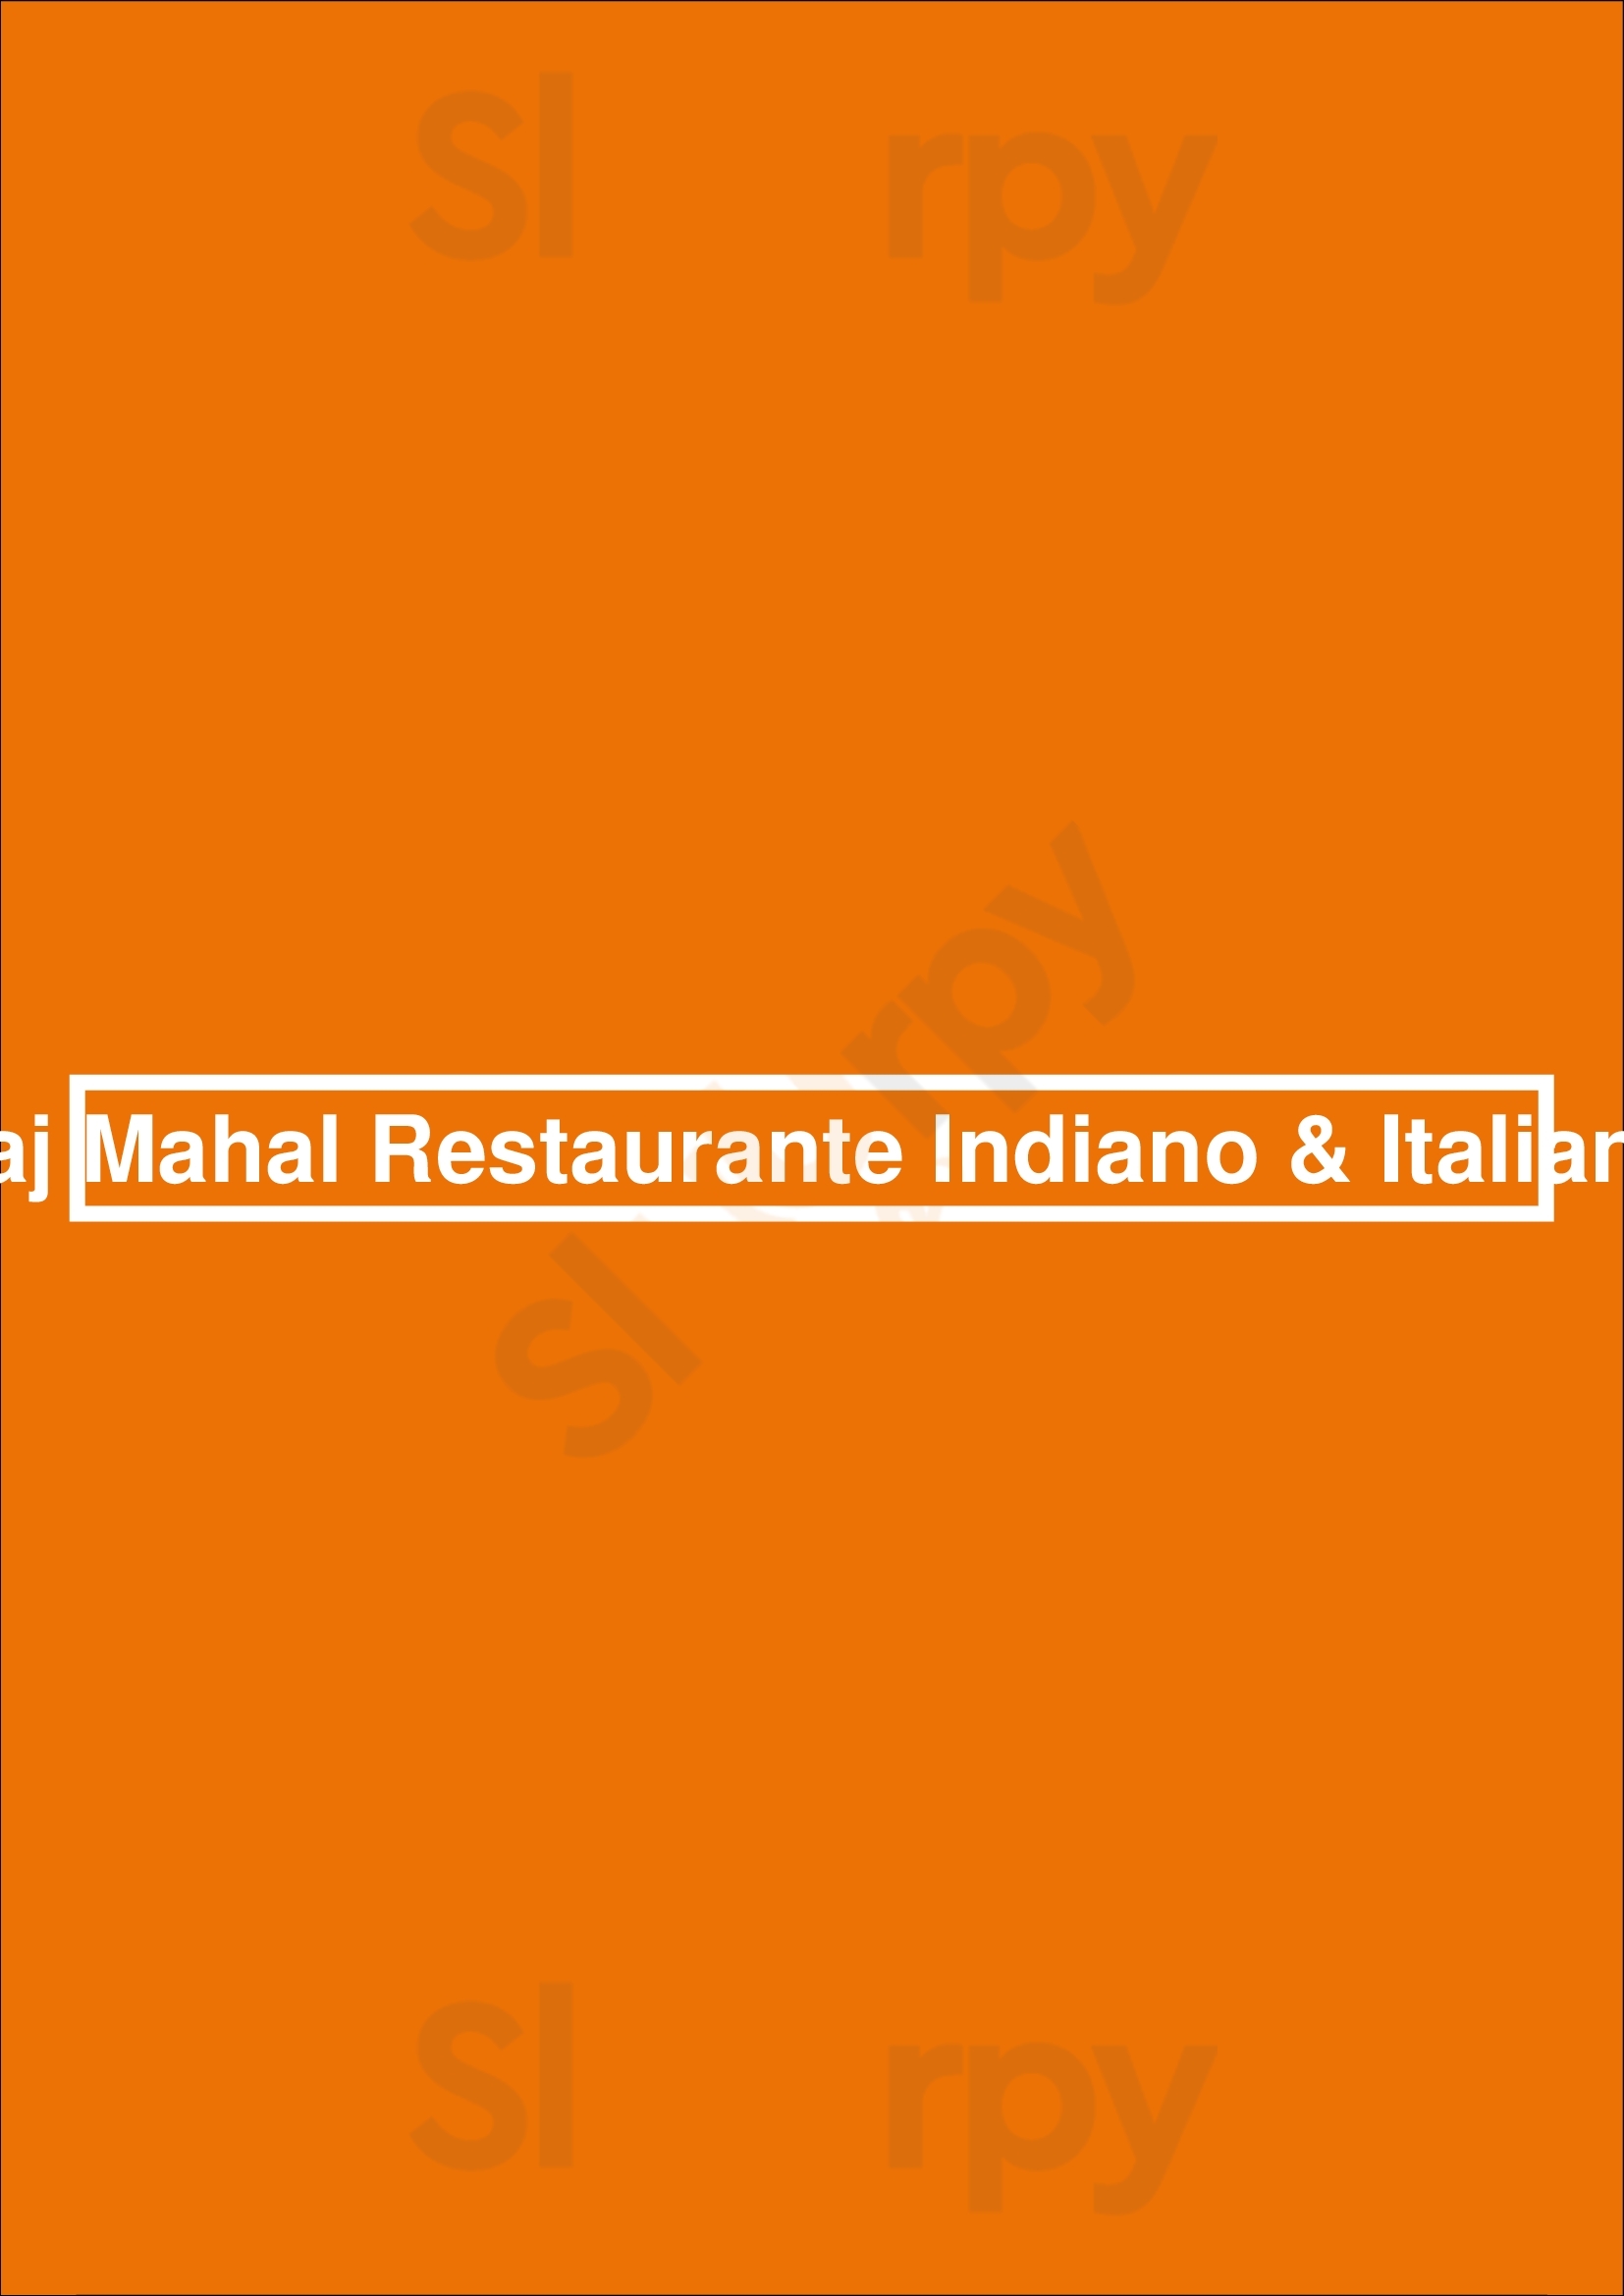 Taj Mahal Restaurante Indiano & Italiano Cascais Menu - 1